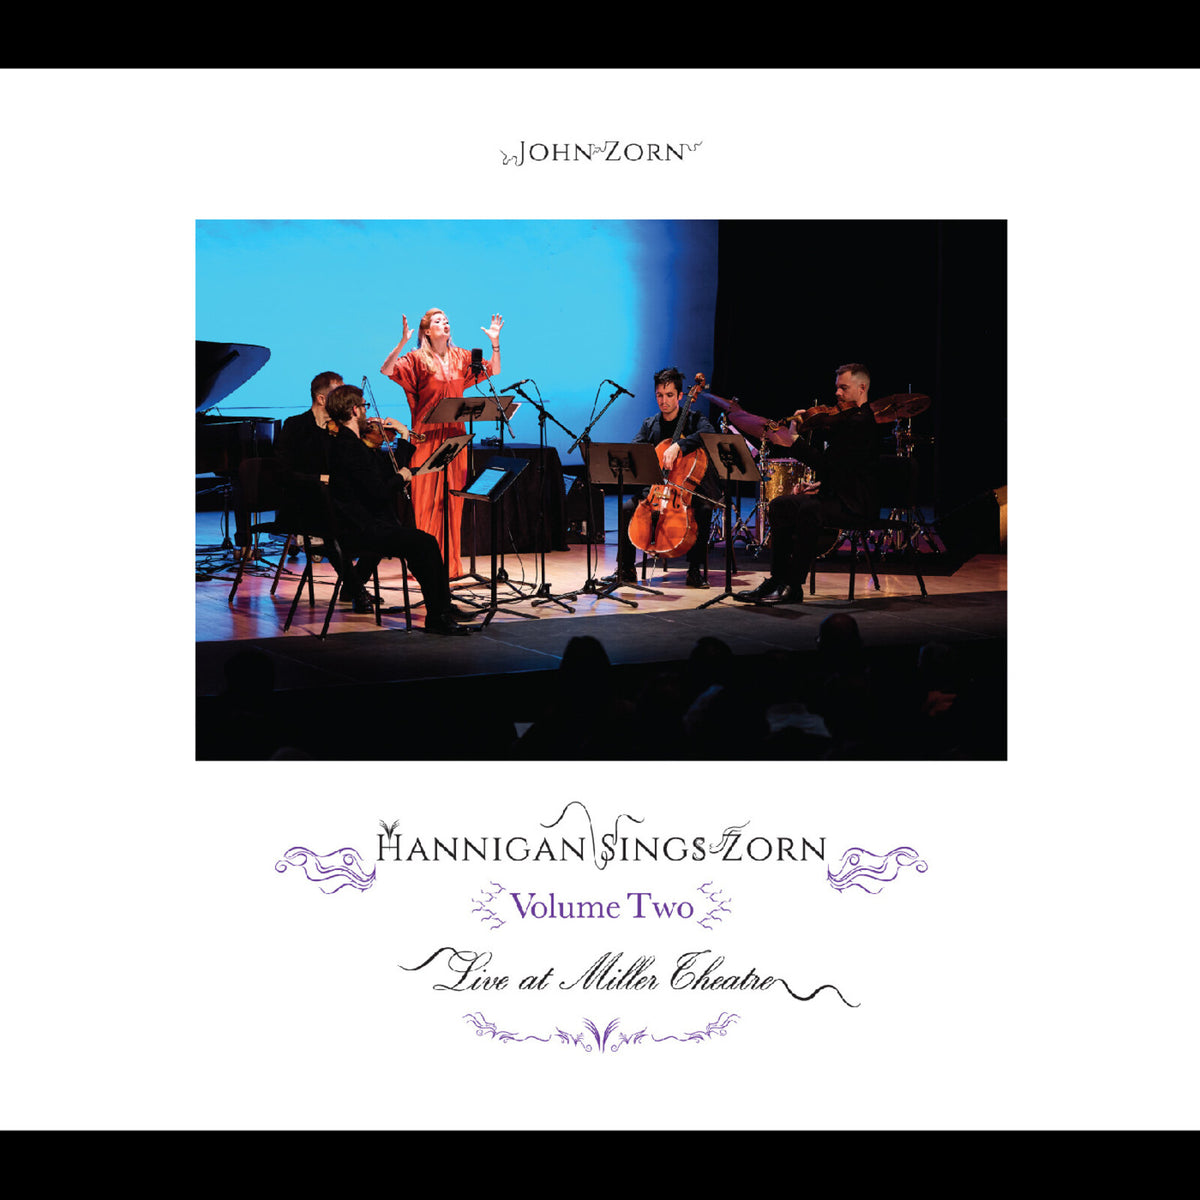 John Zorn - Hannigan Sings Zorn Volume Two - Archival Series - CDTZA9314